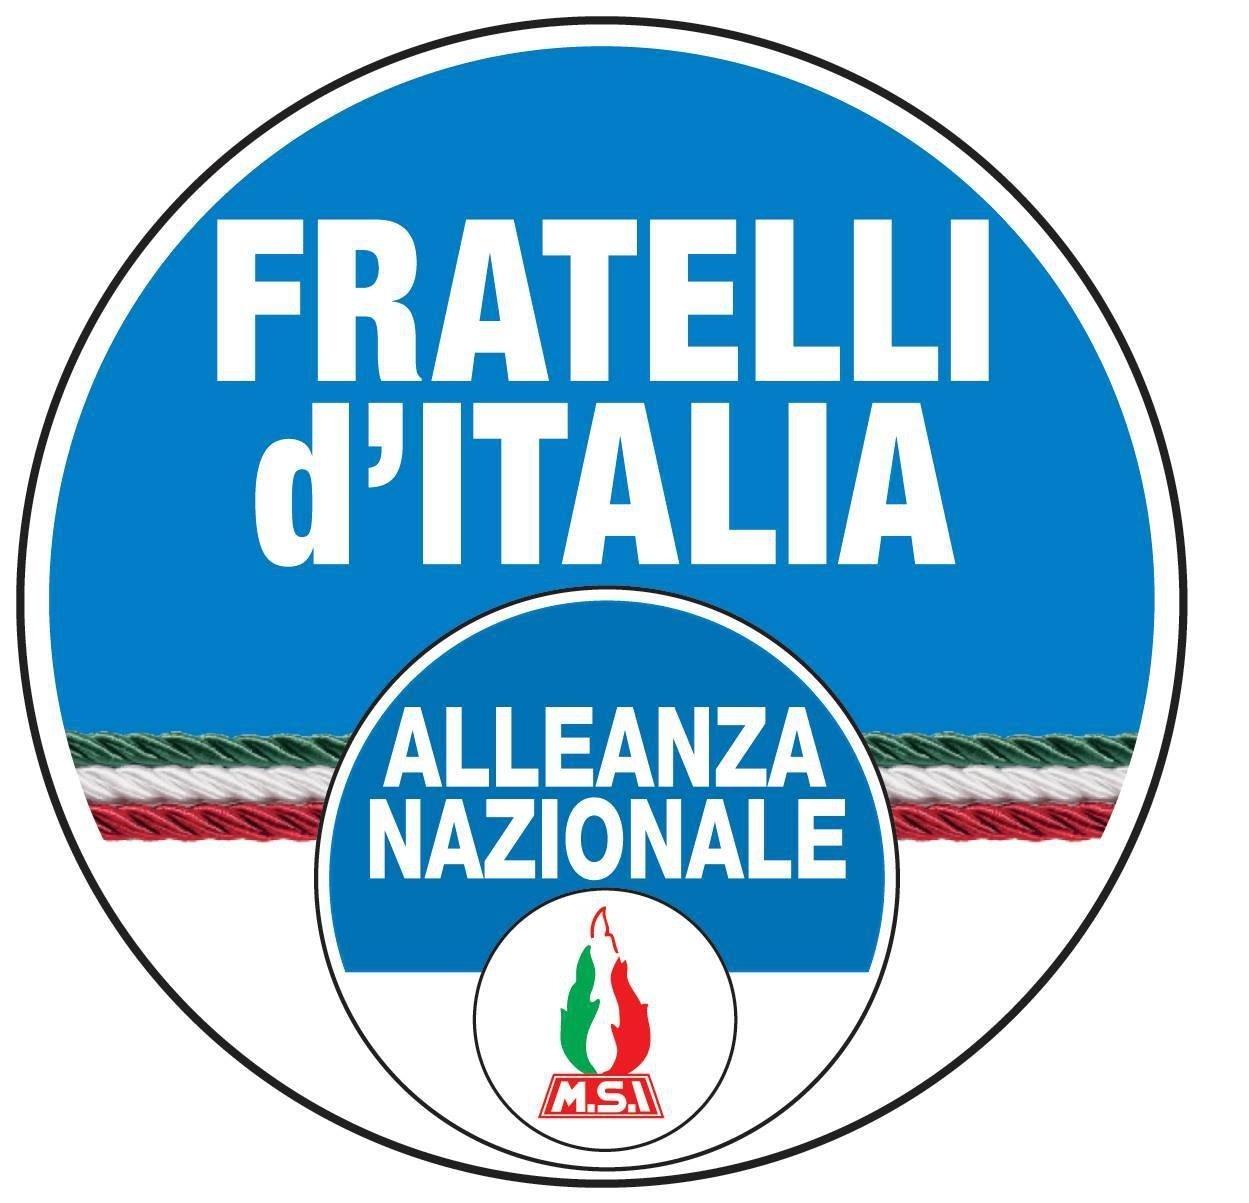 Fratelli d’Italia: “Con i nostri voti Bertero avrebbe vinto”